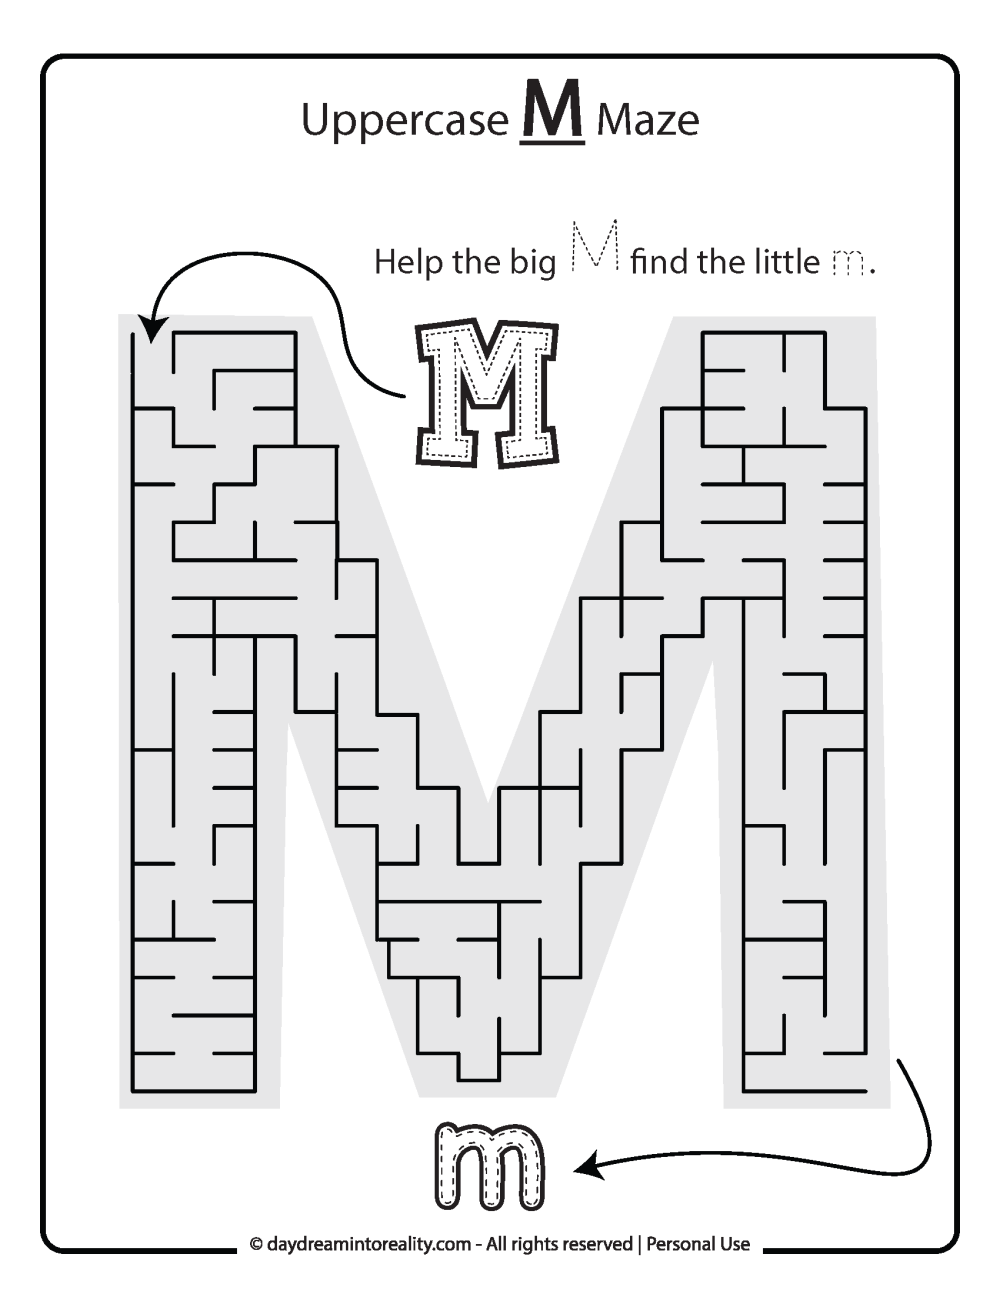 Uppercase "M" Maze Free Printable